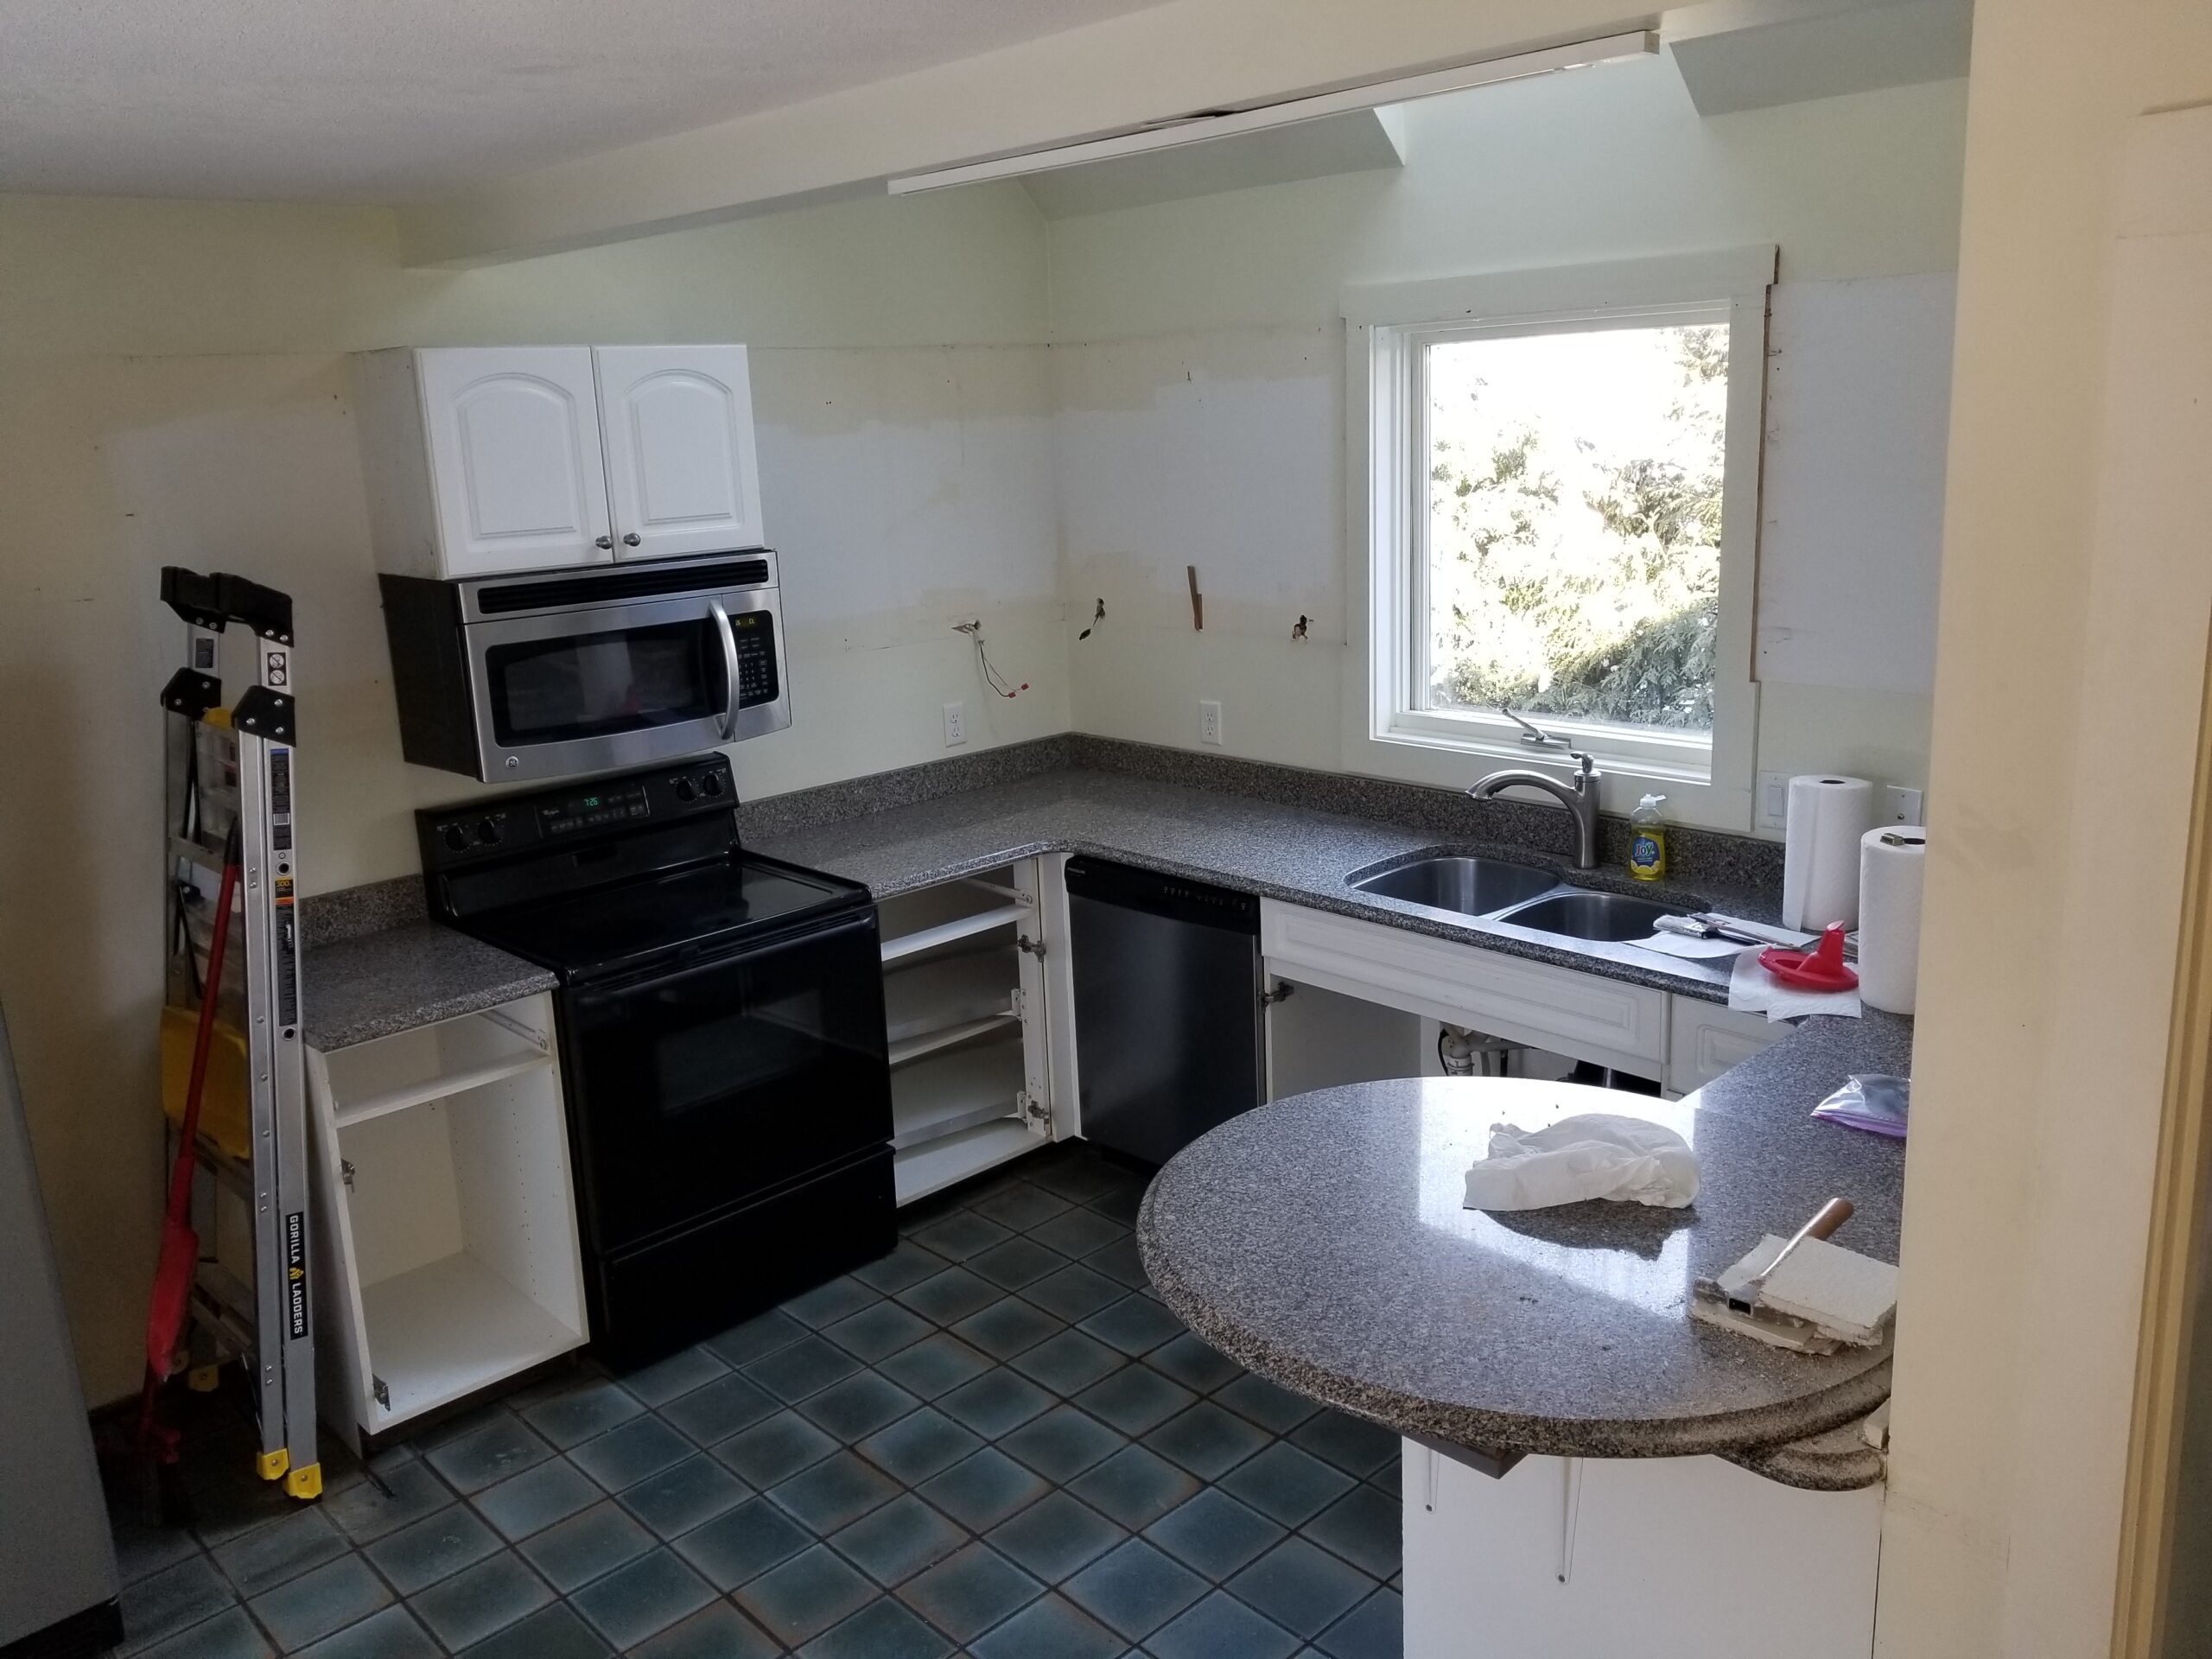 Cohasset kitchen renovation_BEFORE_by JP Hoffman Design Build